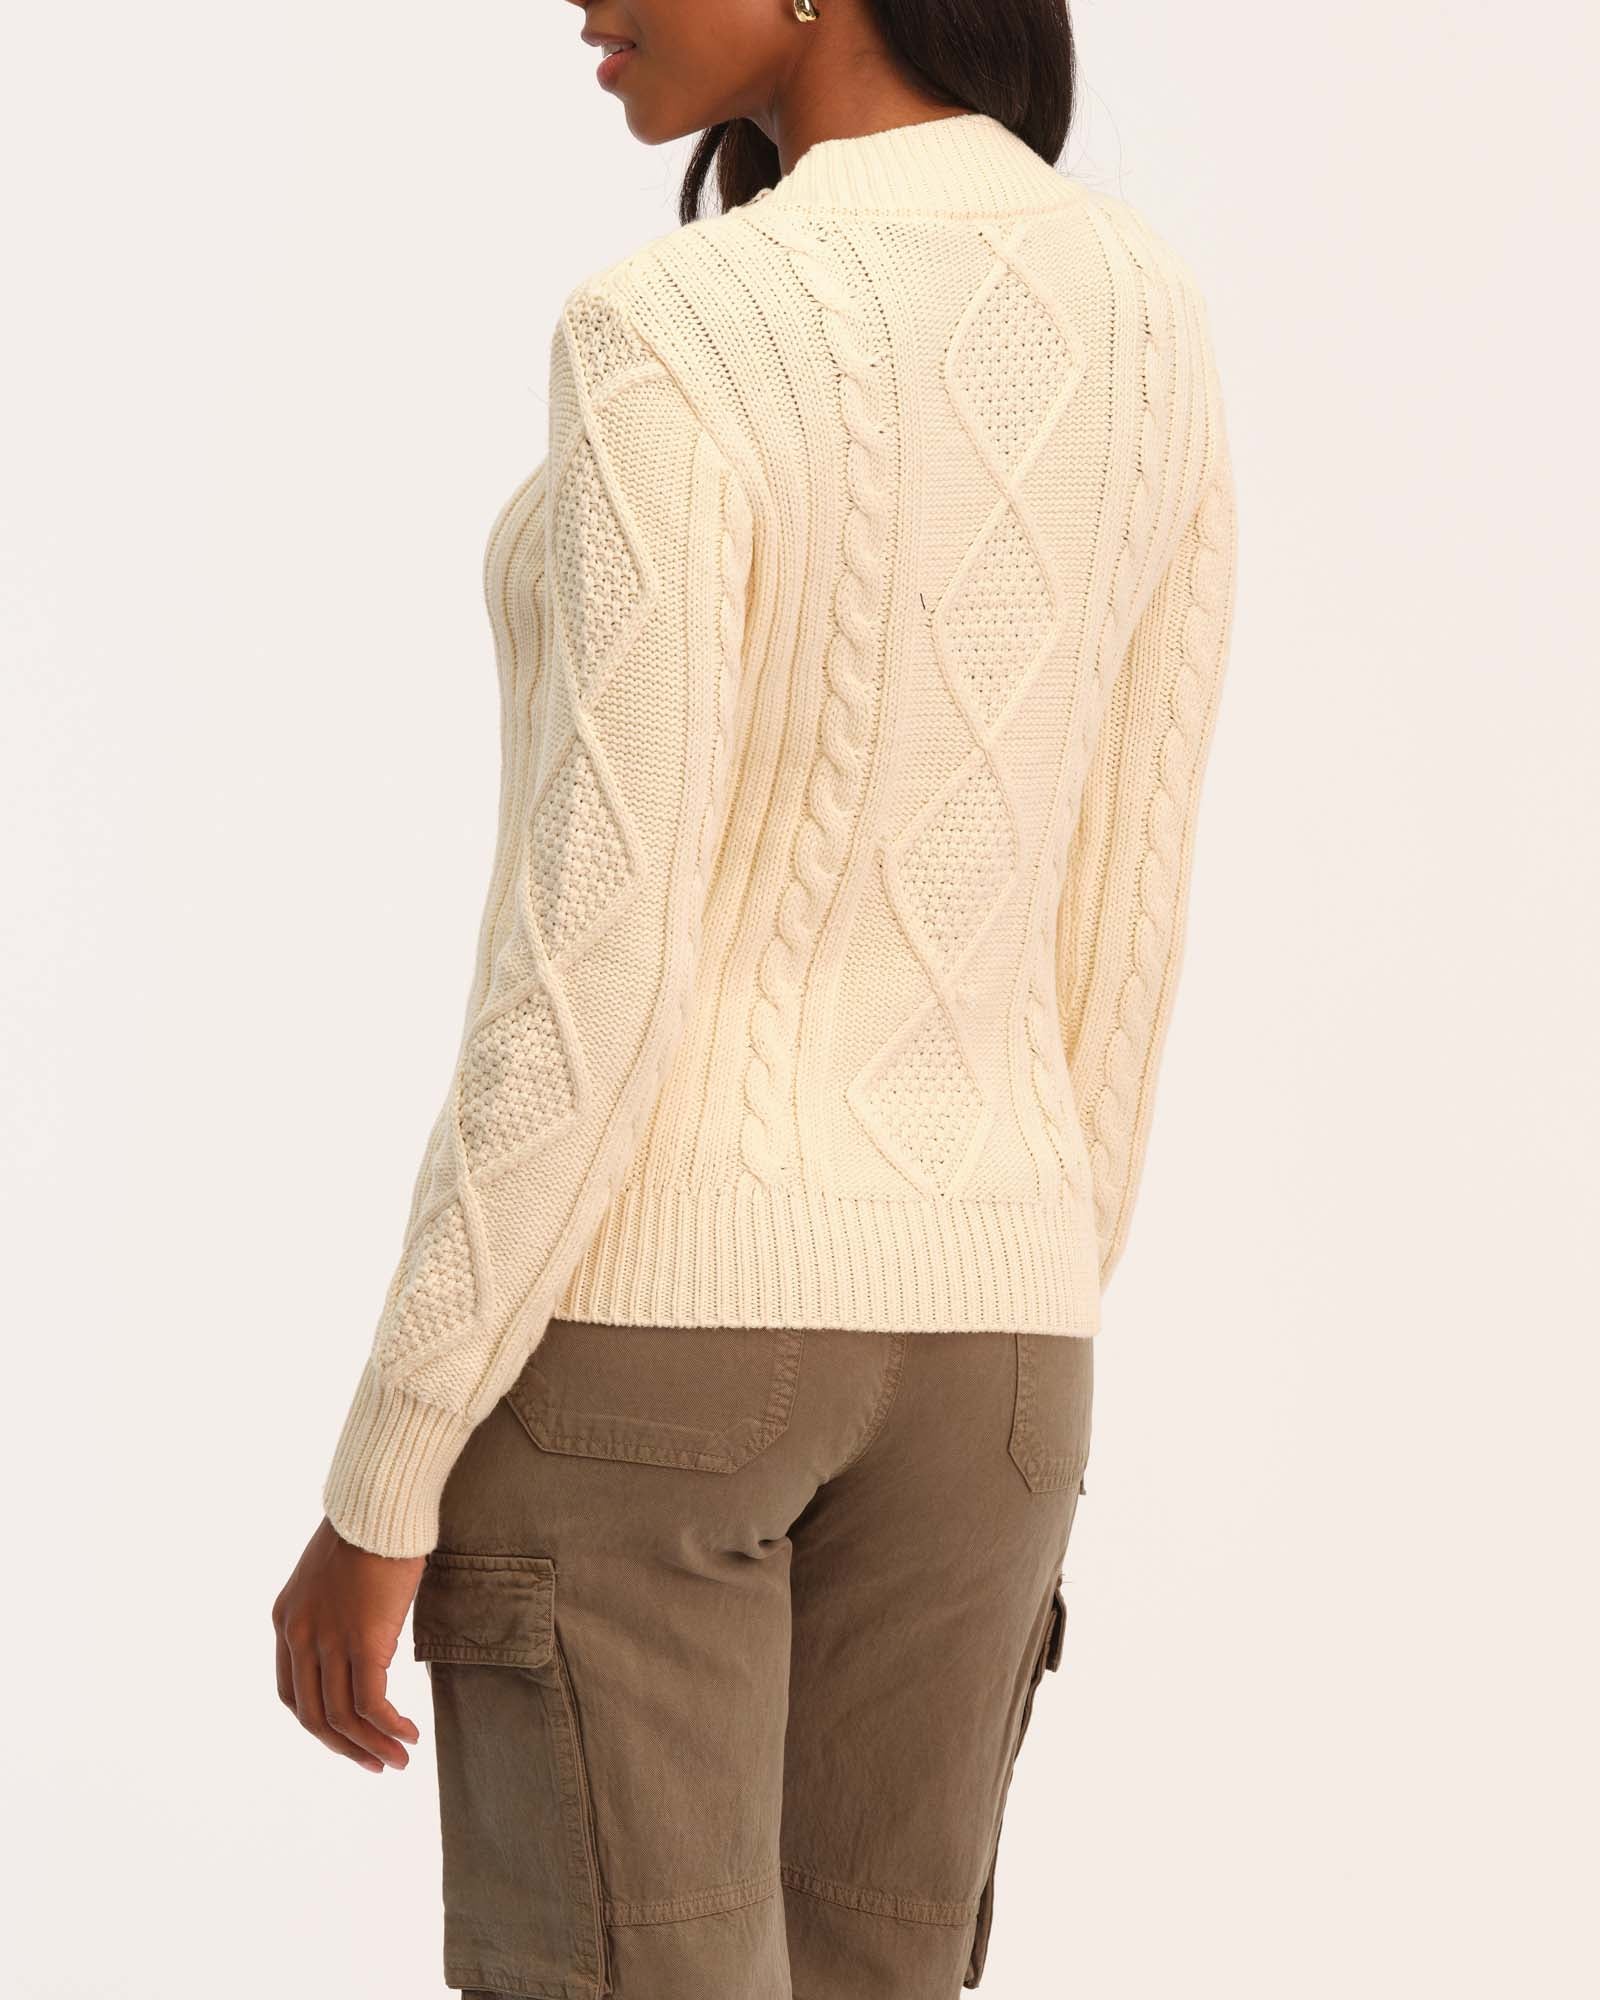 Elie Elie Tahari Women's Cable Knit Sweater with Shoulder Zipper | JANE + MERCER